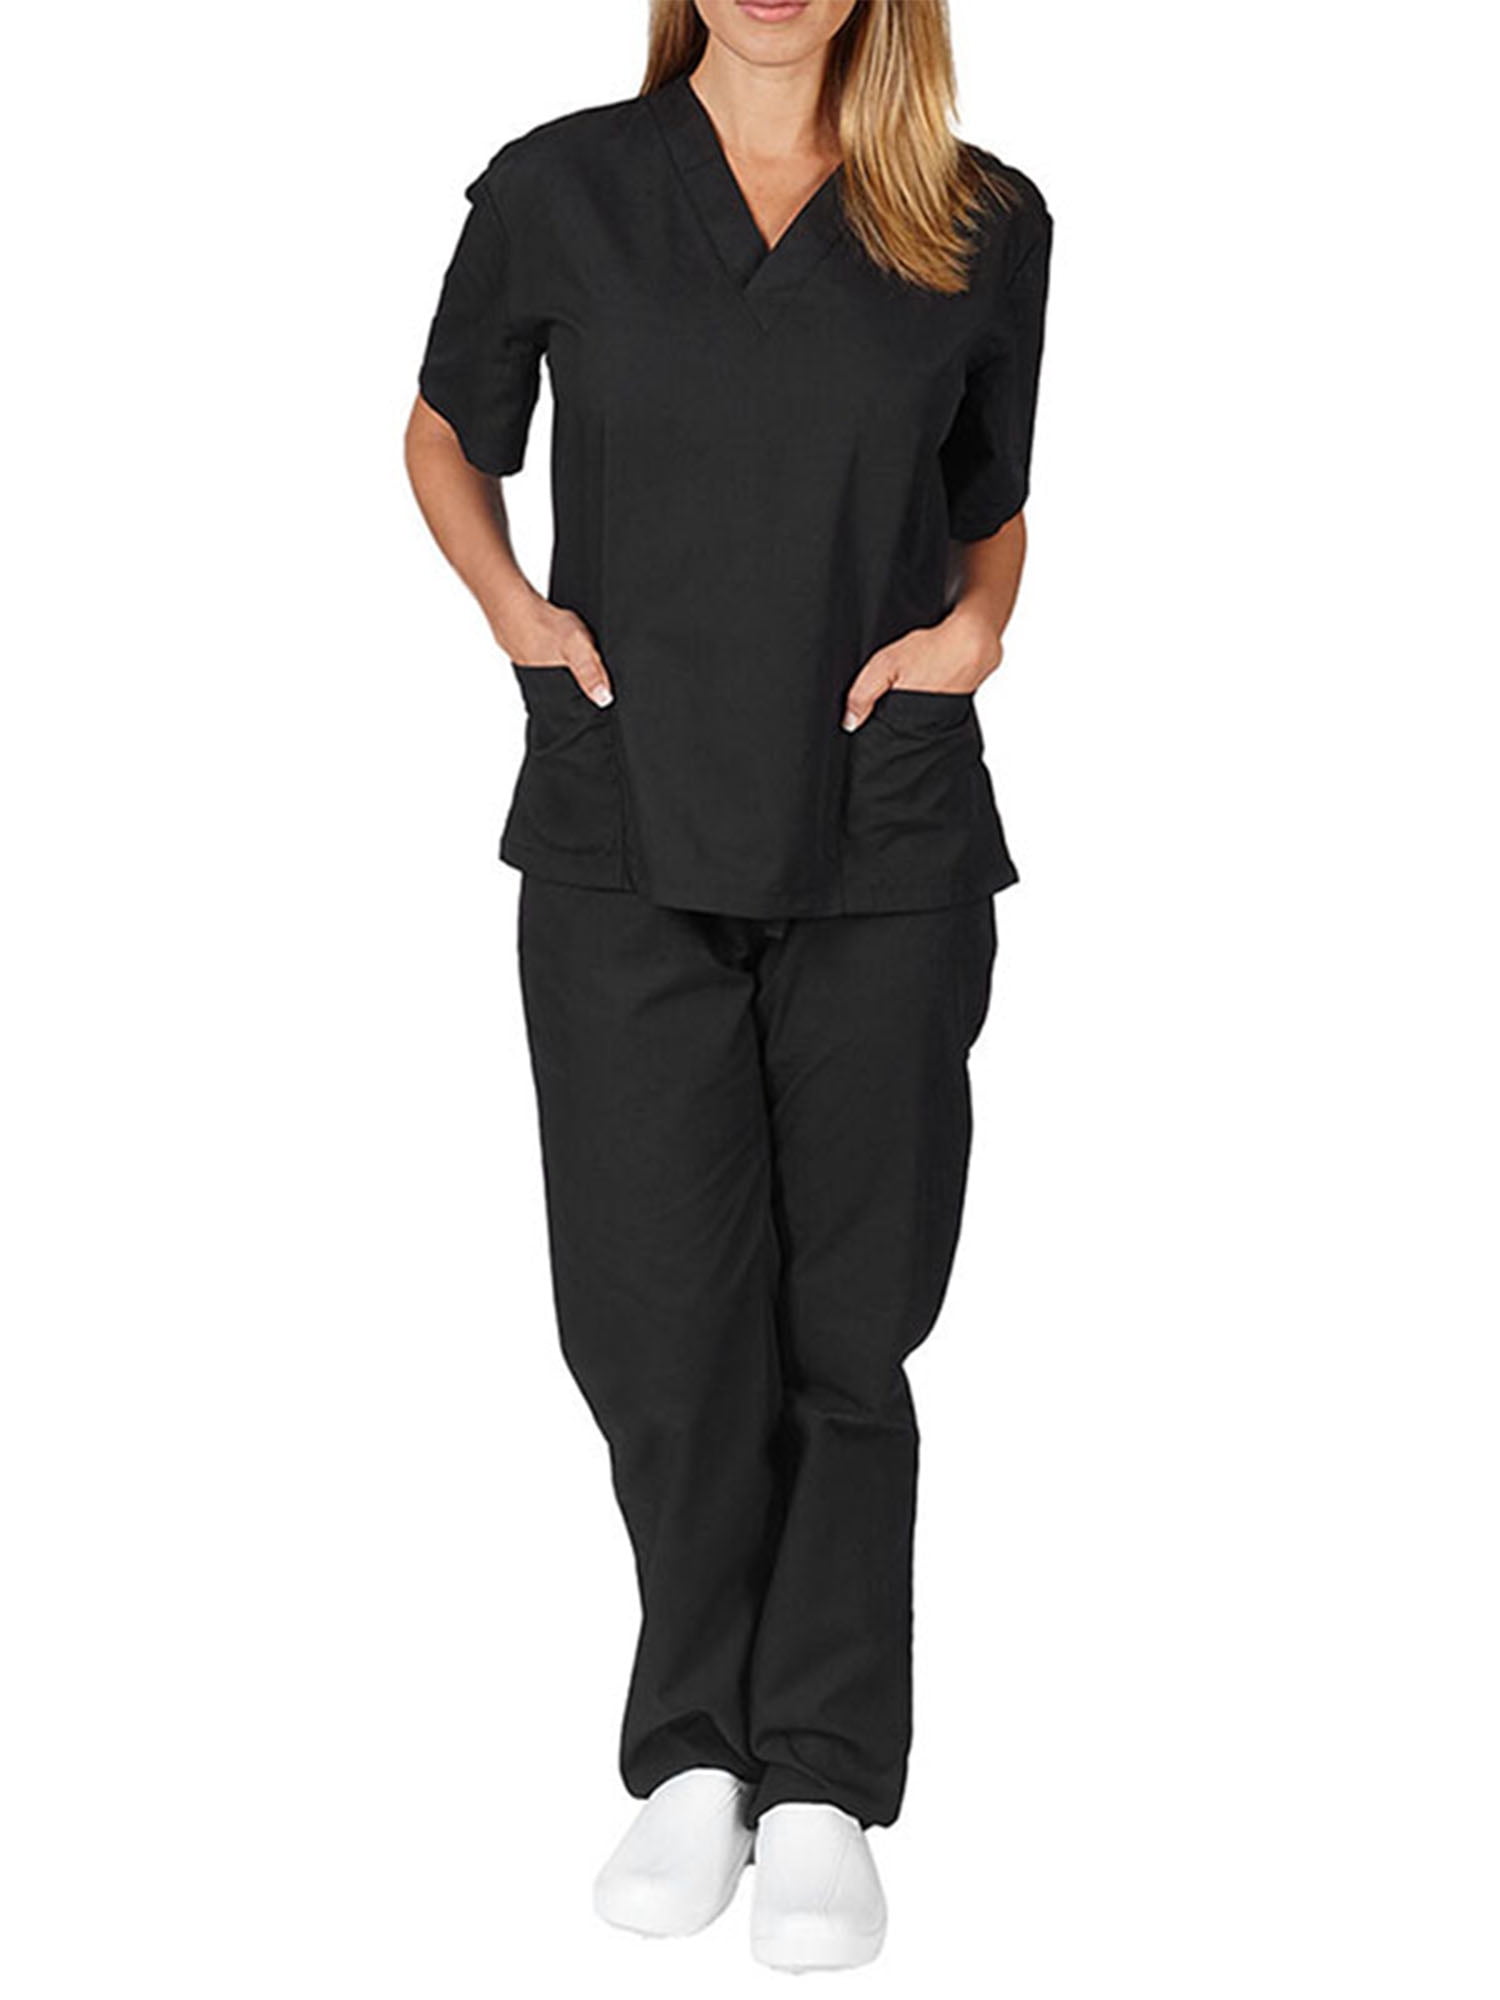 Unisex Scrub Set Medical Uniform Black Nurse Workwear Scrubs Top and Pant V  Neck Doctor Nursing Tunic Suit Scrubs Uniforms Women - AliExpress